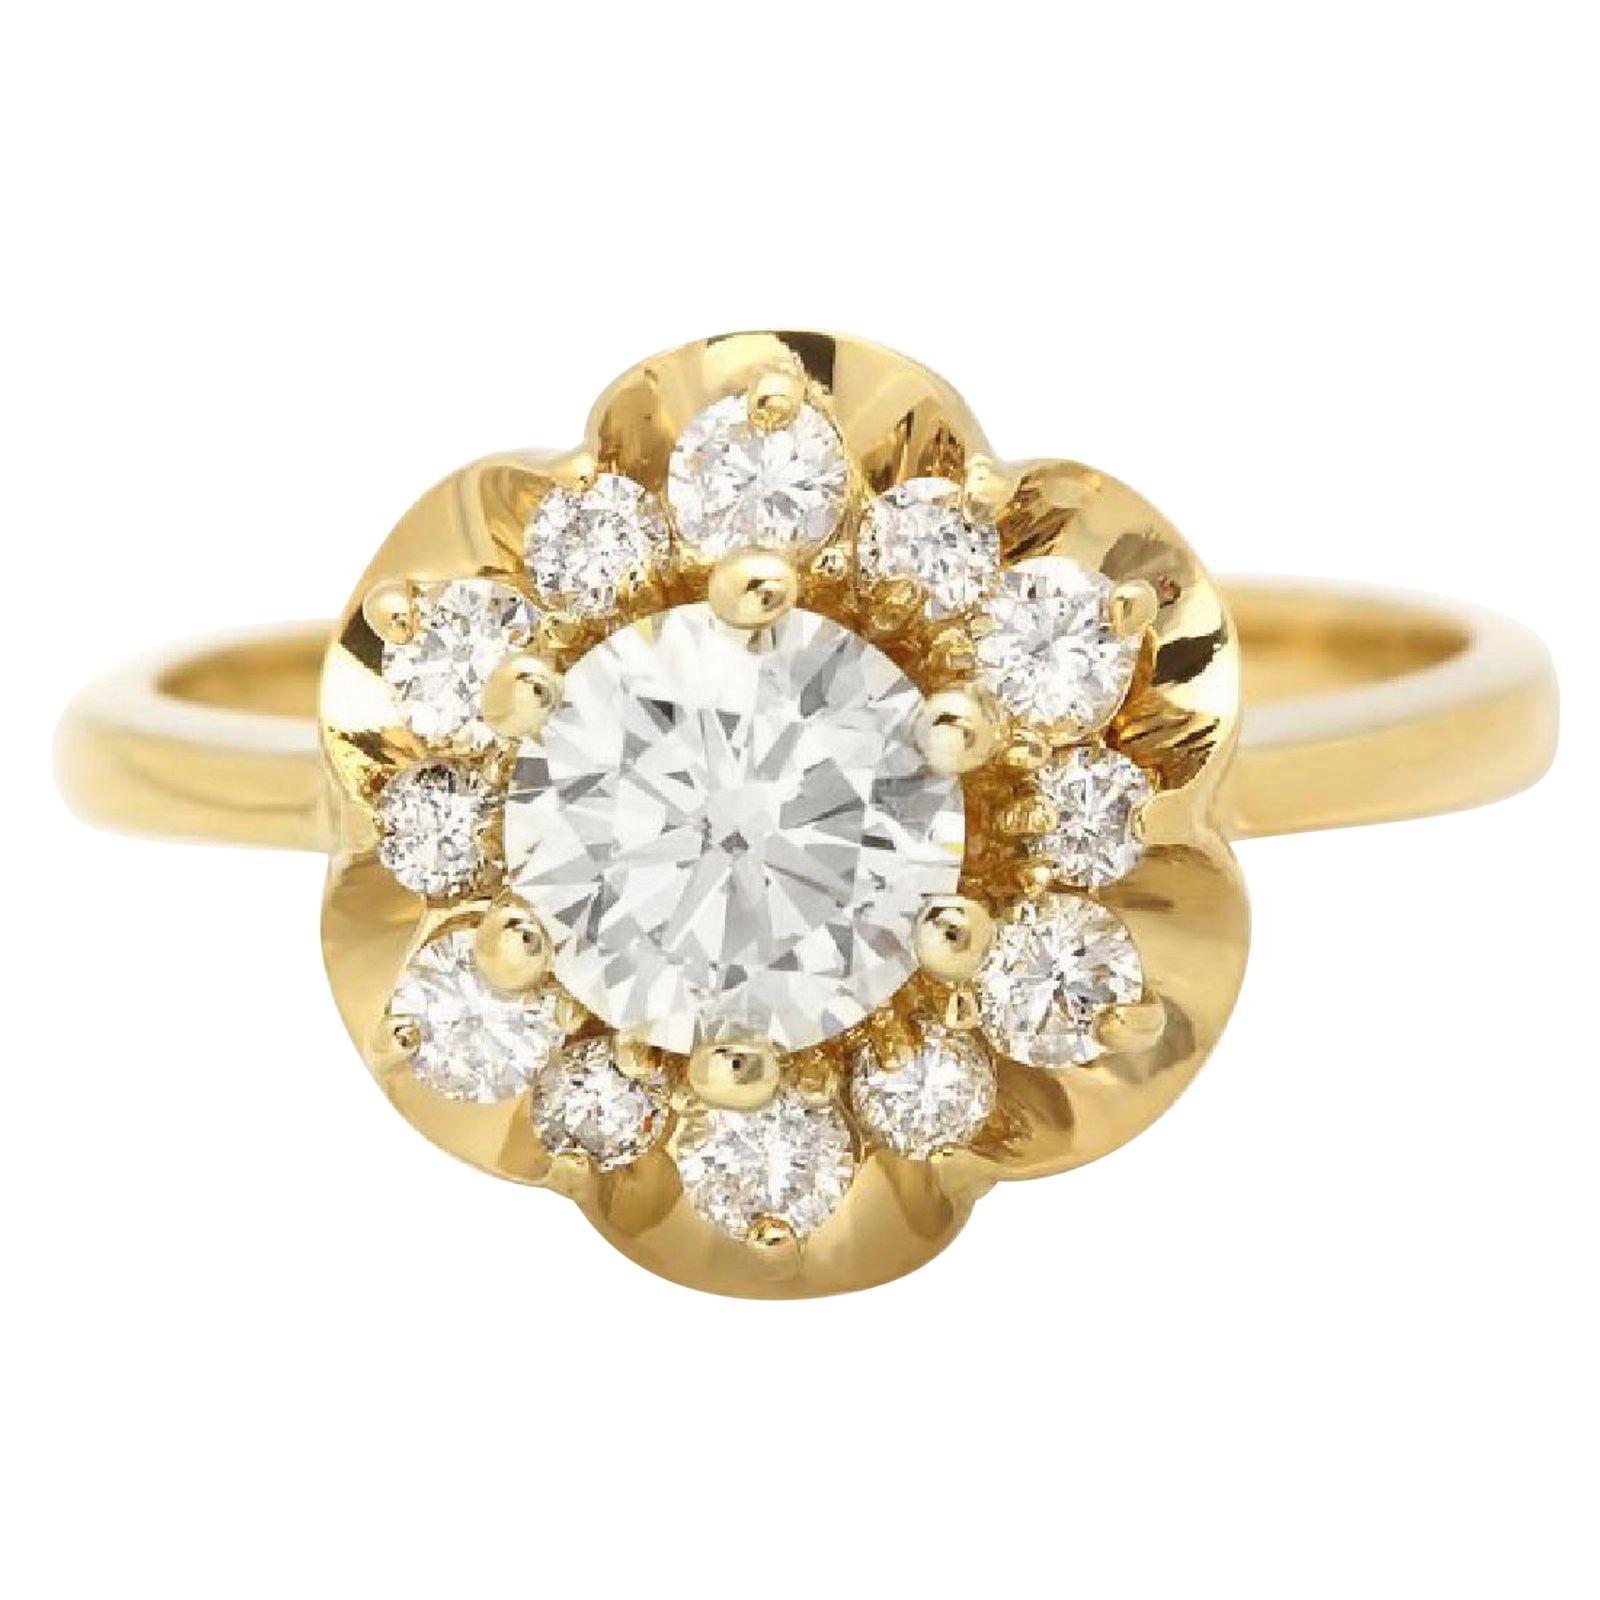 Splendid 1.15 Carat Natural Diamond 14 Karat Solid Yellow Gold Ring For Sale